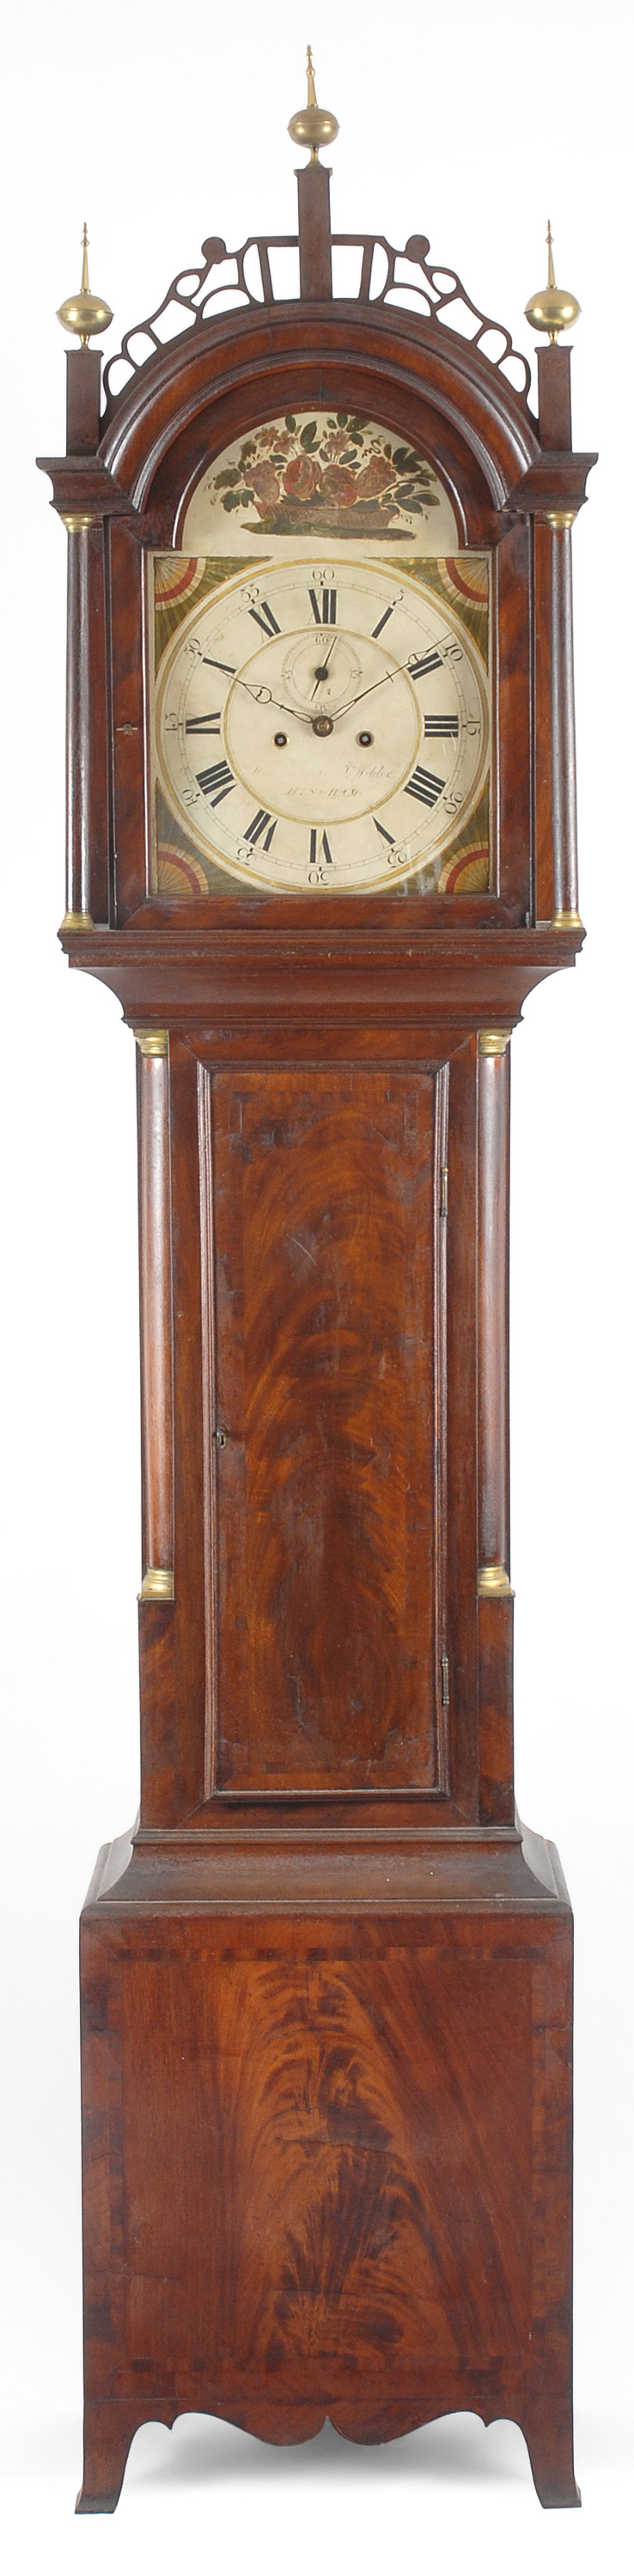 A very fine mahogany tall case clock, by Joshua Wilder, Hingham, Mass, 1822.